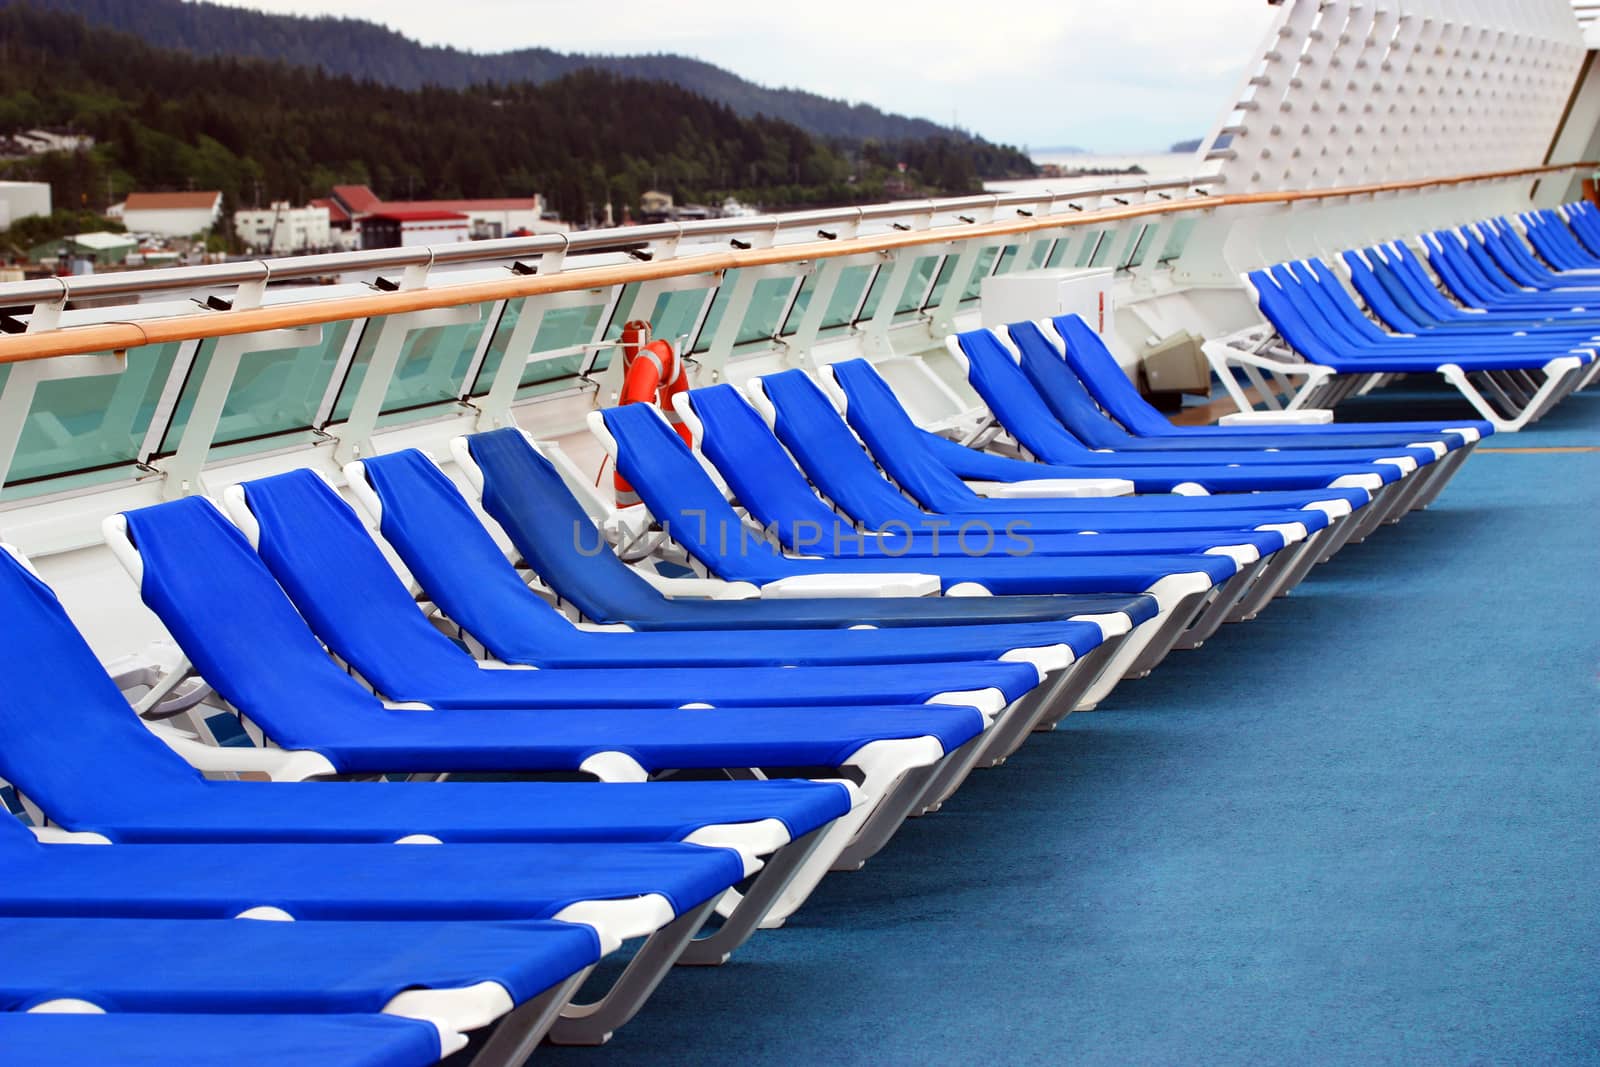 Row of beach chairs on cruise ship deck